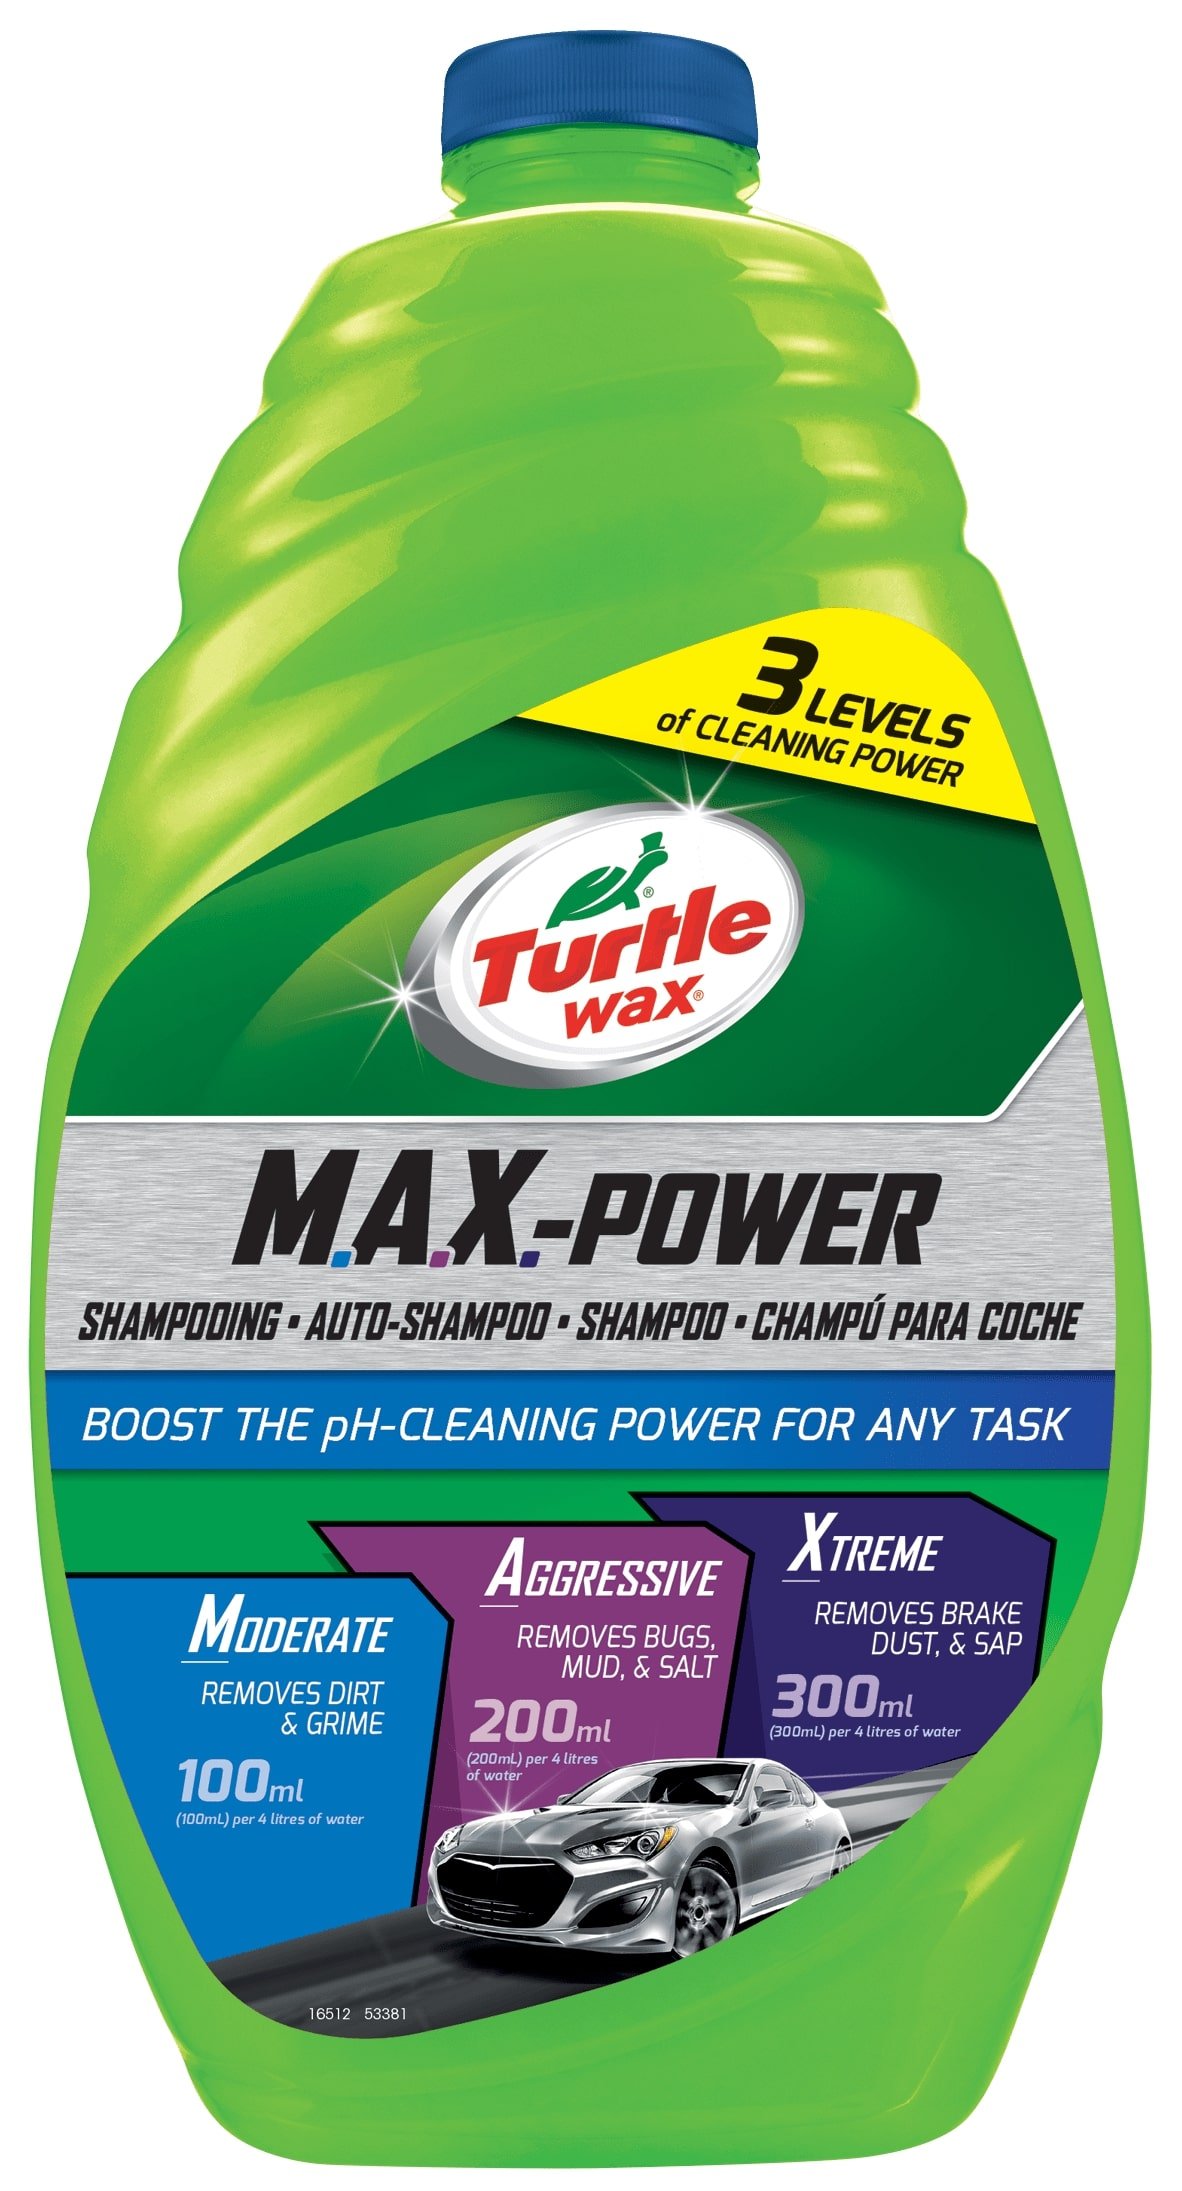 Bilschampo TURTLE WAX Max Power 1.42L